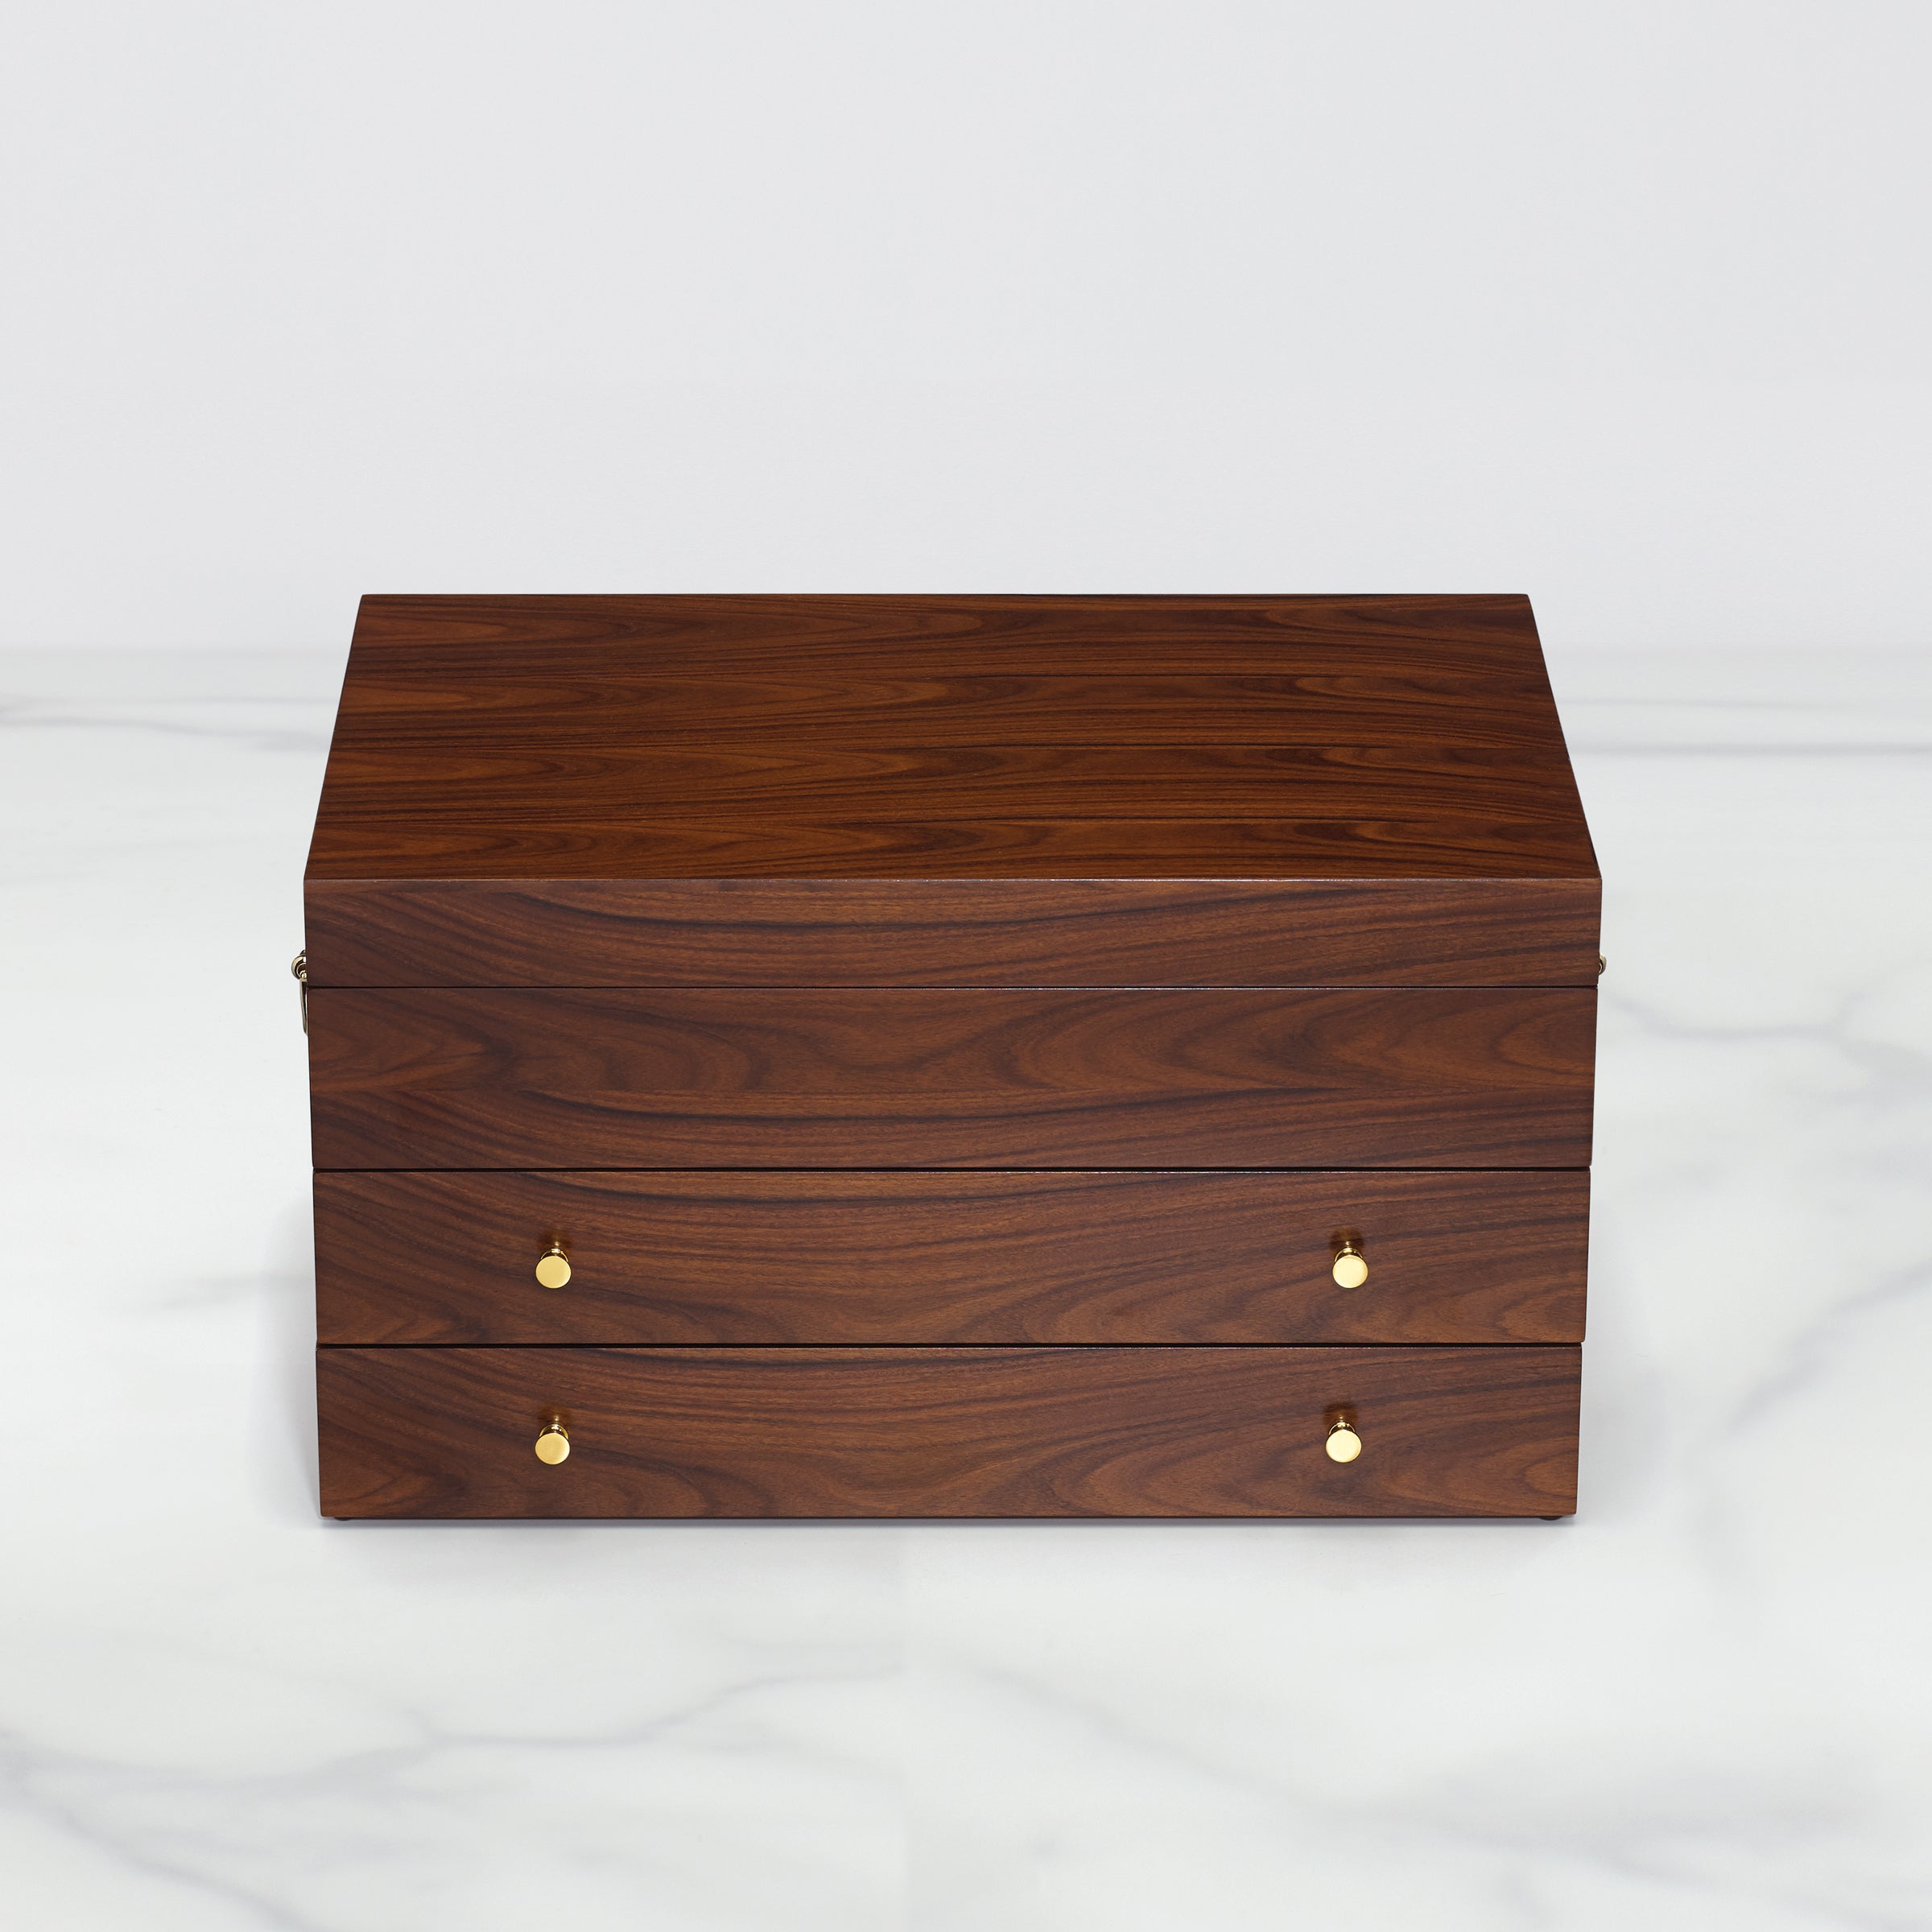 Ms. box] American style top wooden jewelry box (ornament box